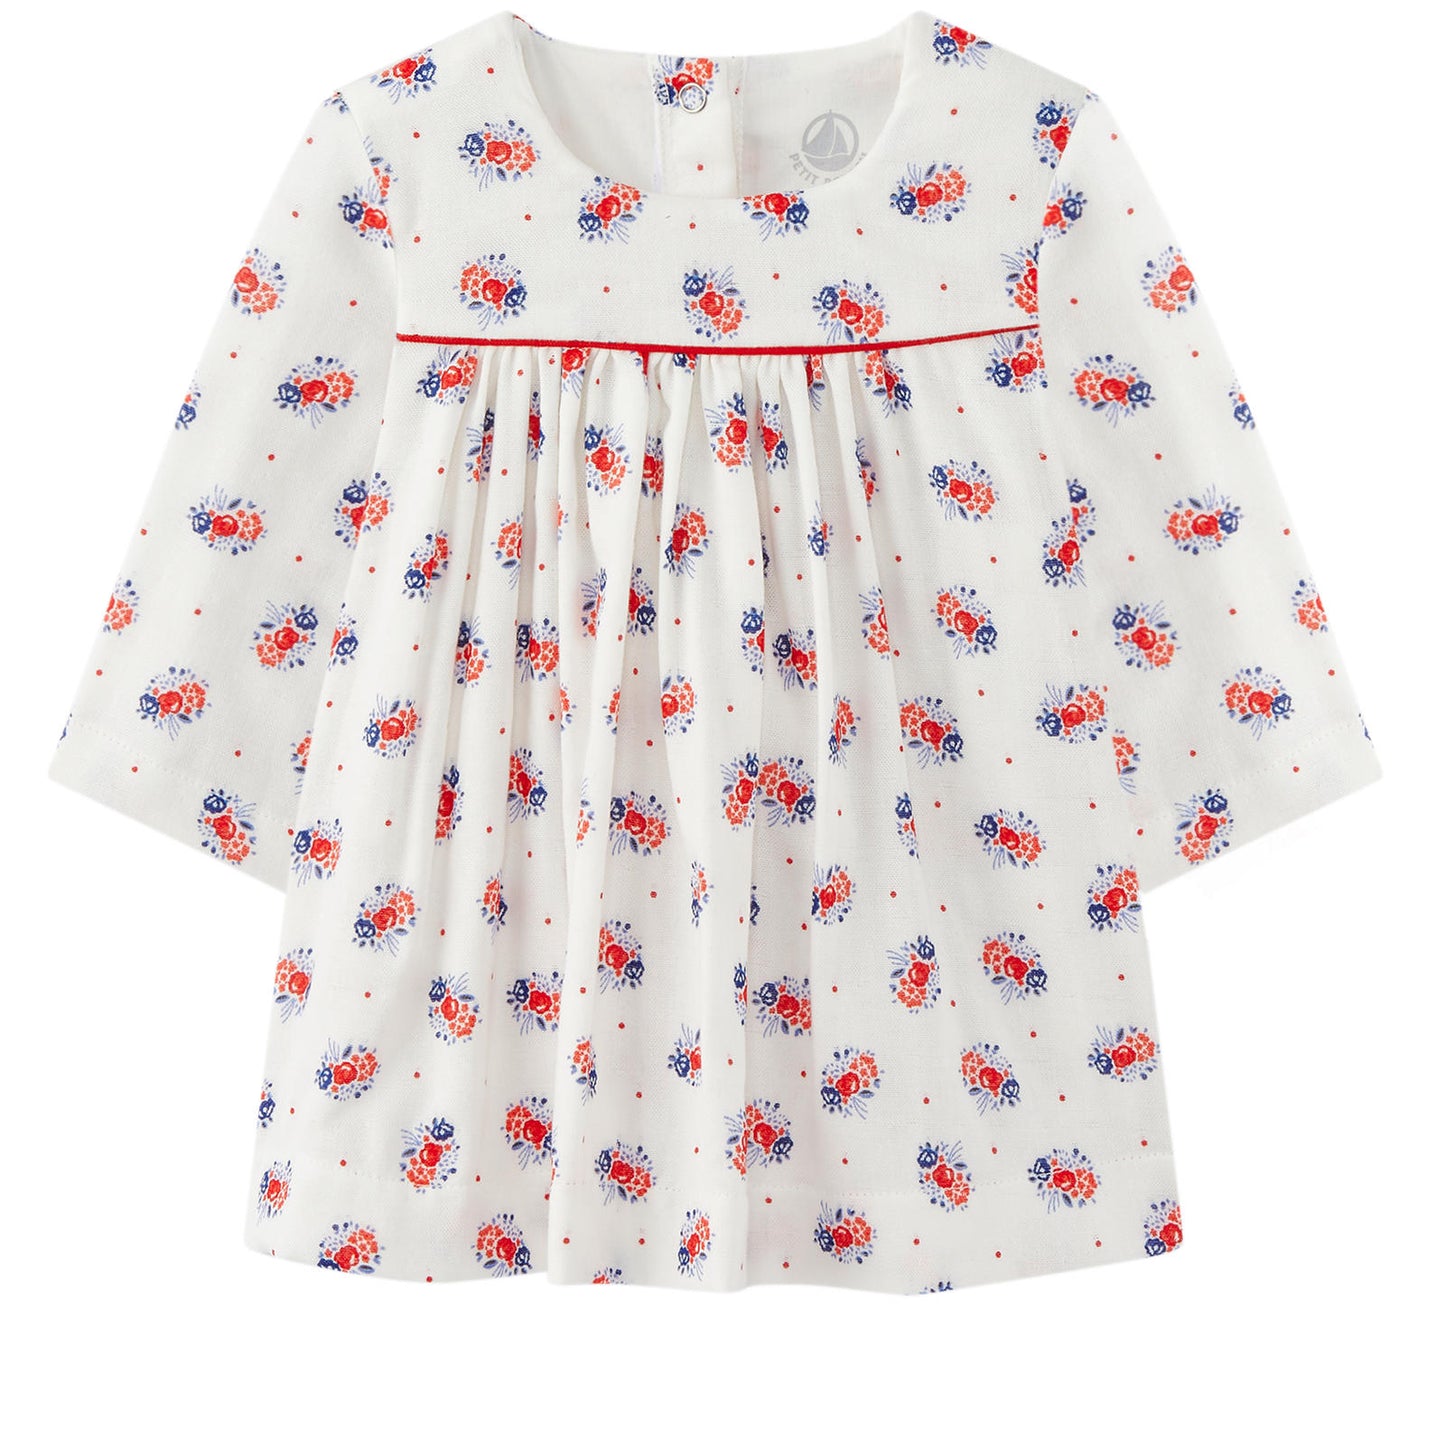 Petit Bateau: Floral Print Dress Long Sleeve (12m)